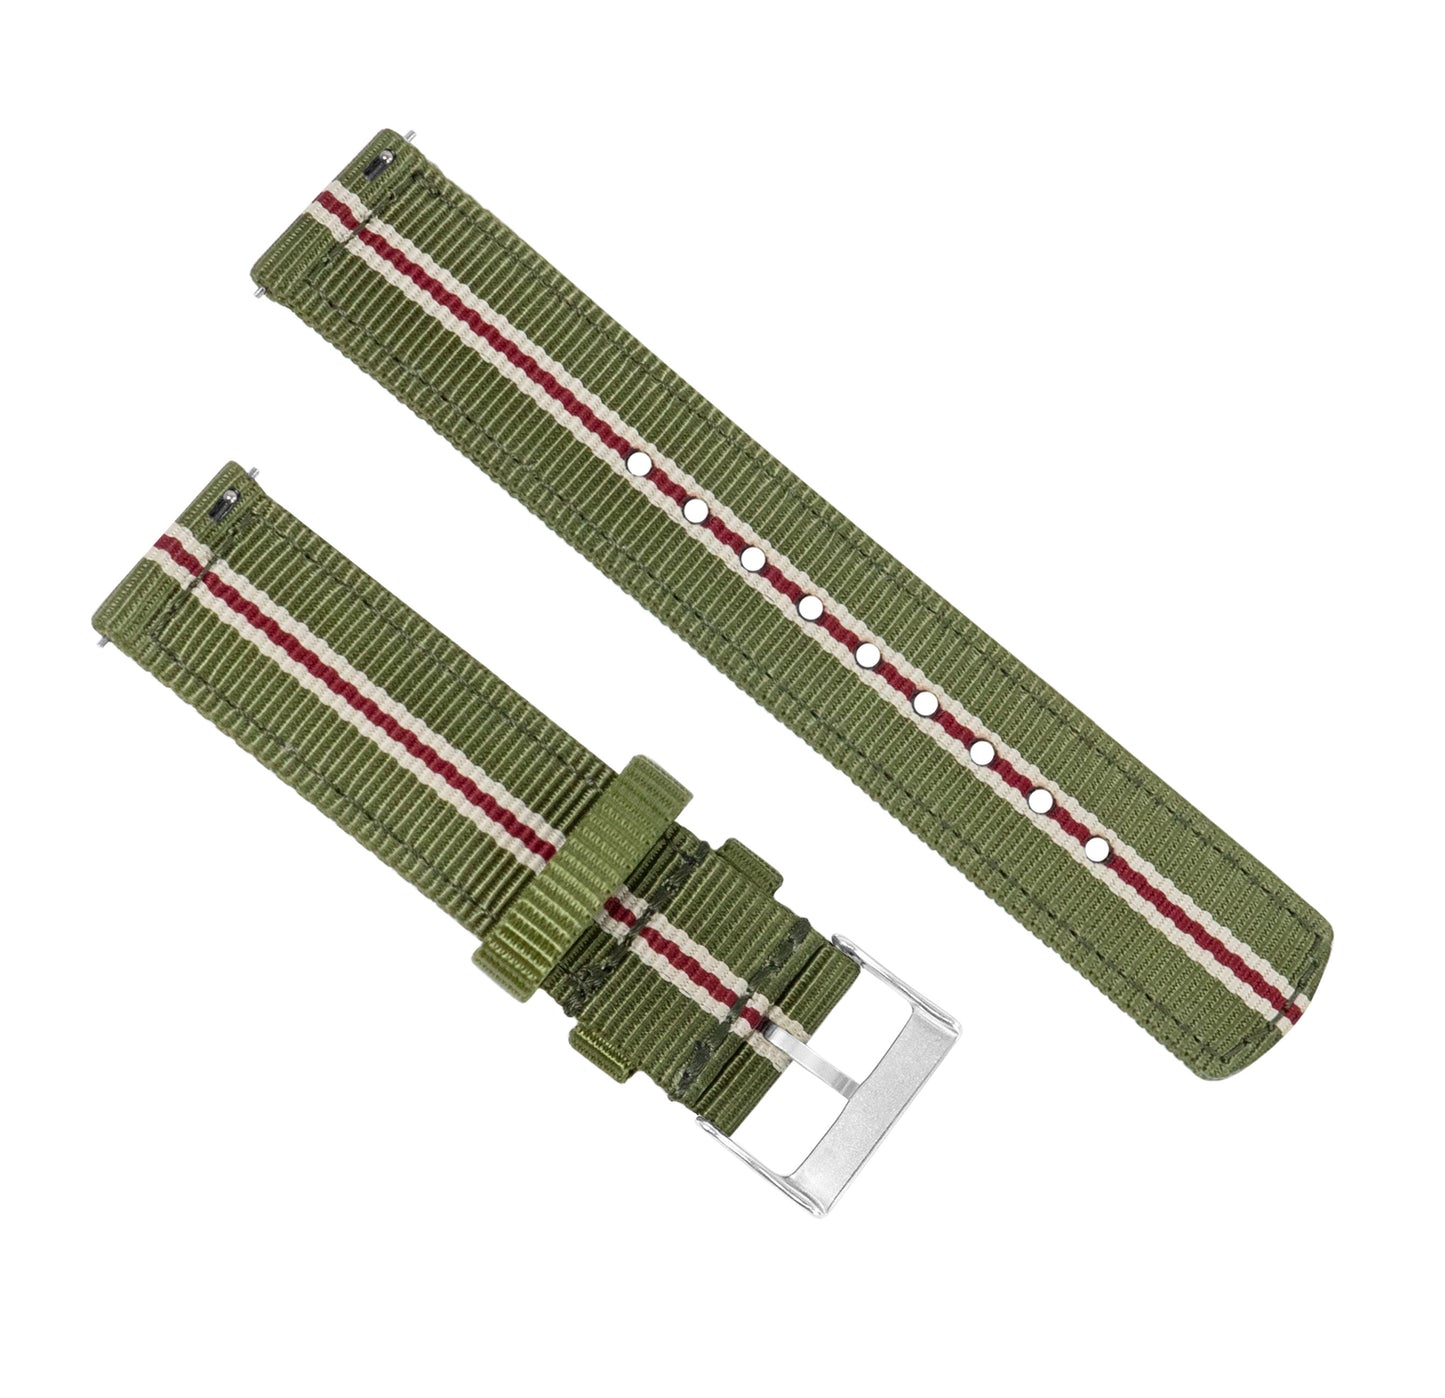 Samsung Galaxy Watch Active | Two-Piece NATO Style | Army Green & Crimson - Barton Watch Bands